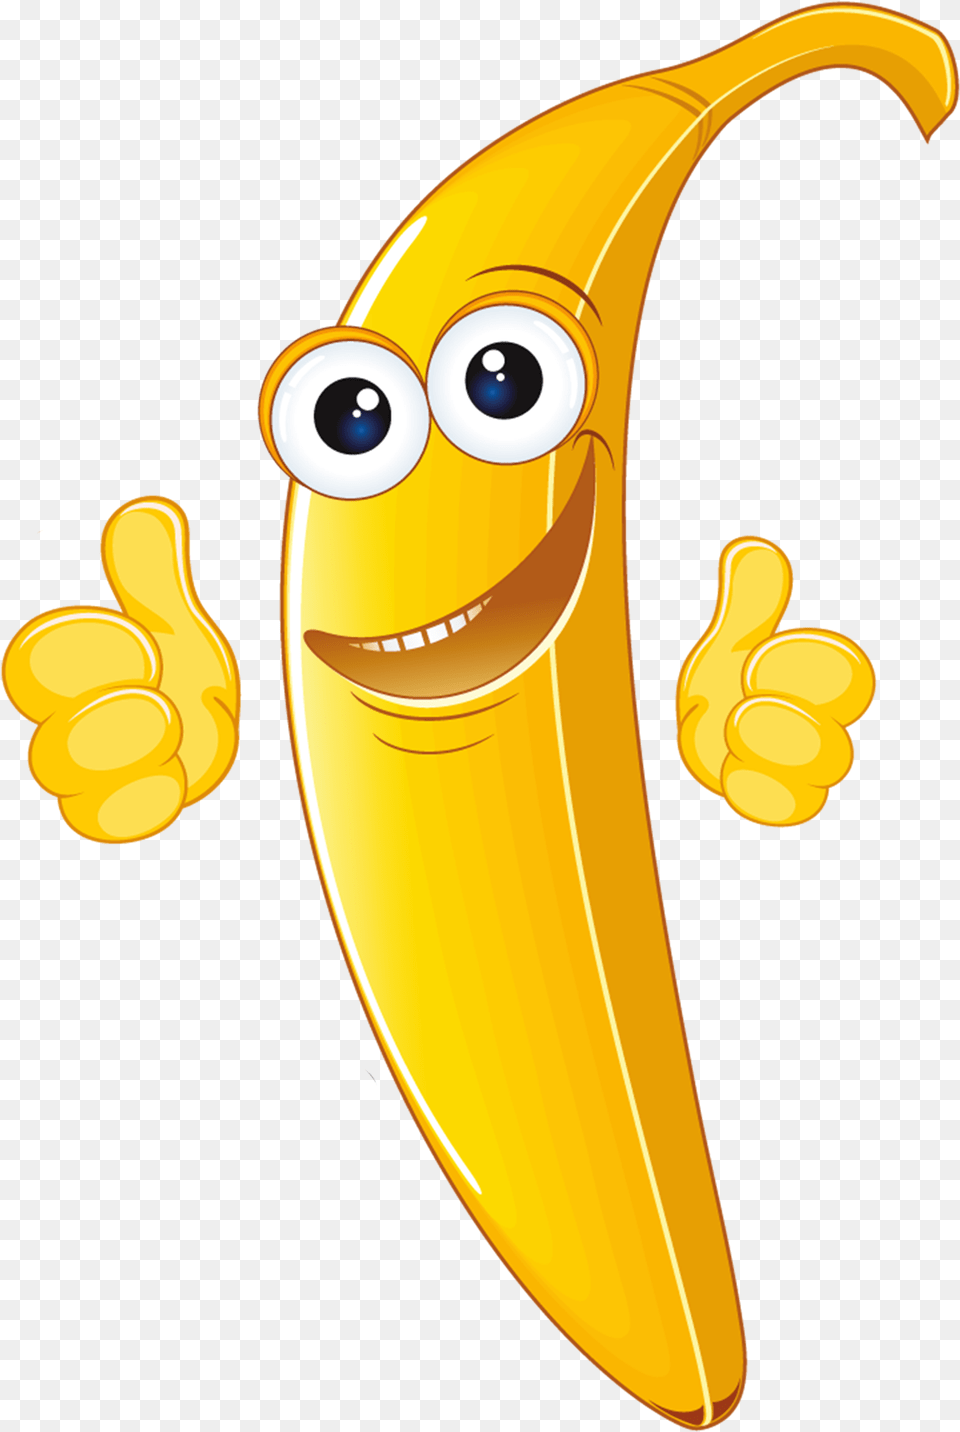 Smiling Animation Banana Cartoon Trivia True Or False Questions Funny, Food, Fruit, Plant, Produce Png